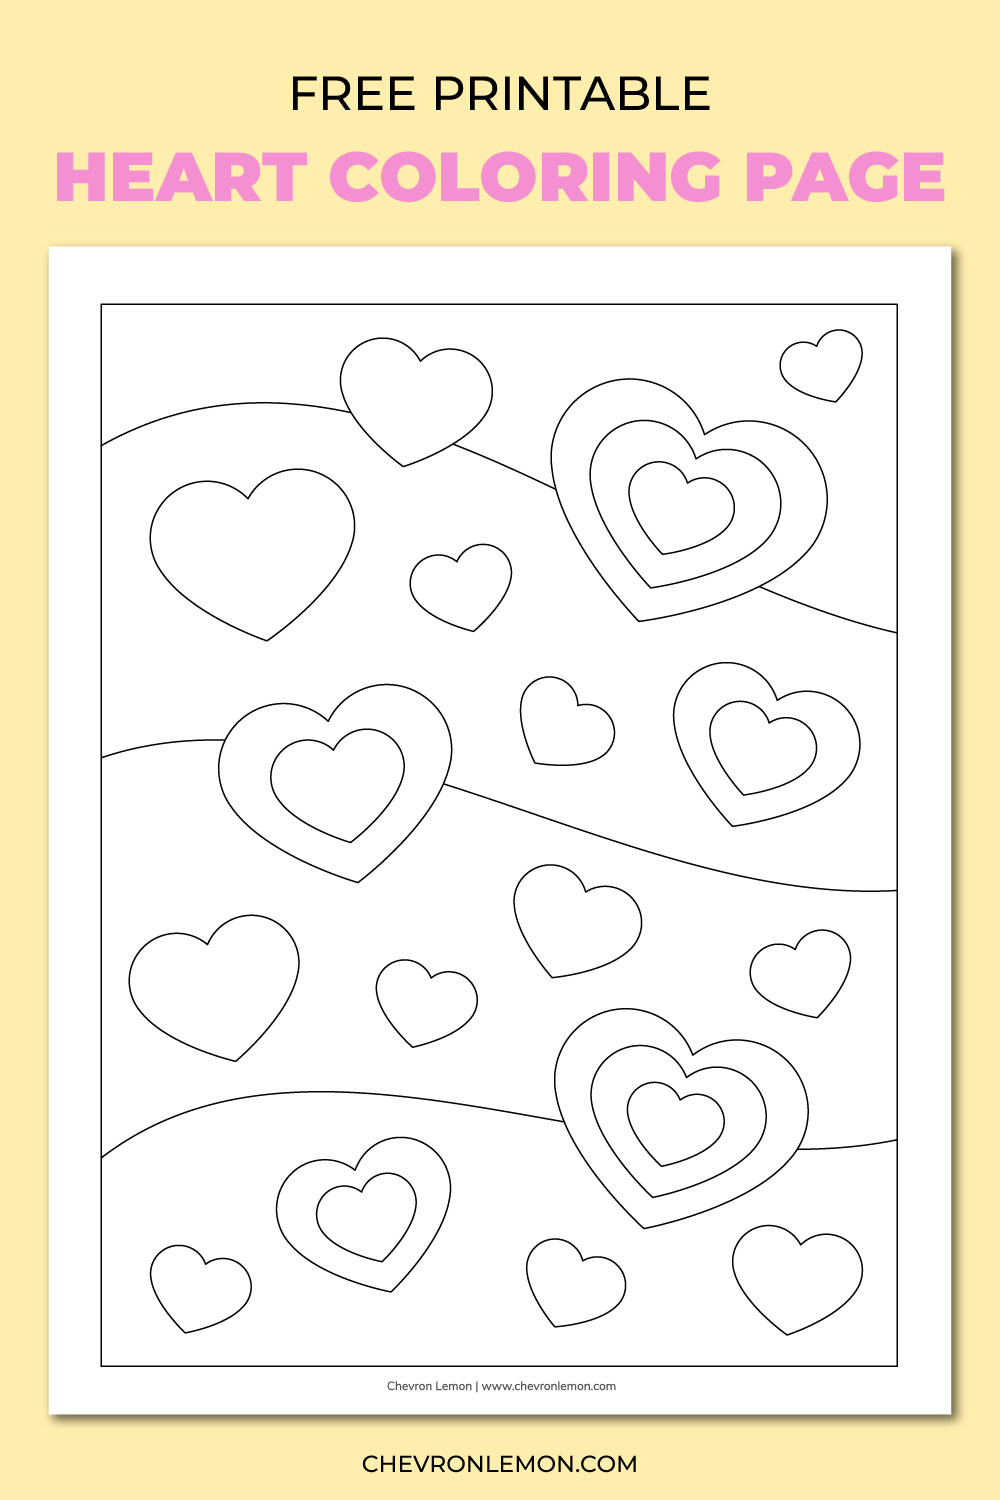 Printable heart templates in different sizes - Chevron Lemon